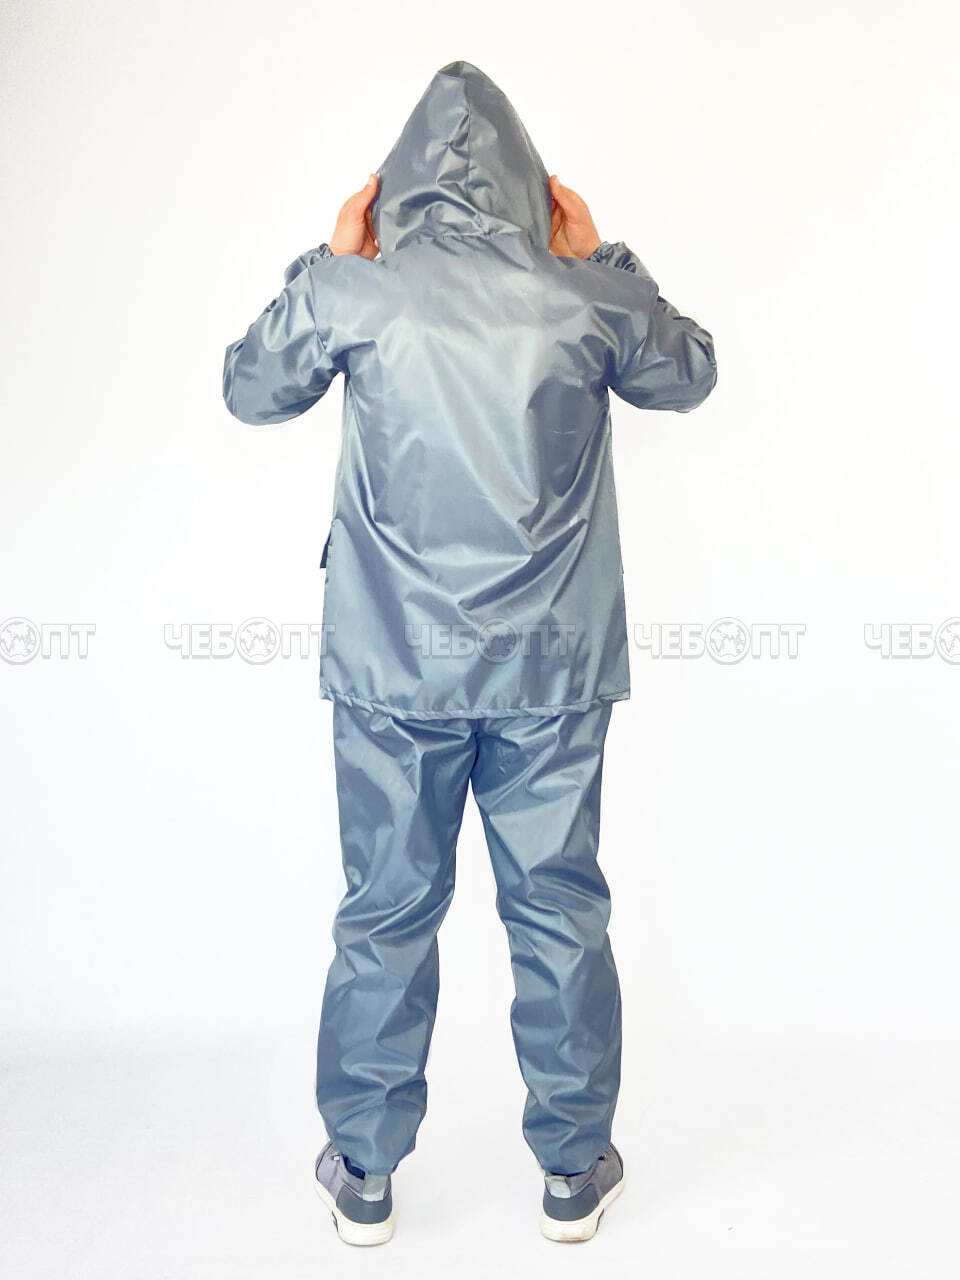 Костюм-дождевик (куртка, брюки),ЧЕБПРО,размер 48-50,100% полиэстер, Арт. ДожКостМуж/серый, МПС [15] СобПр. ЧЕБОПТ.